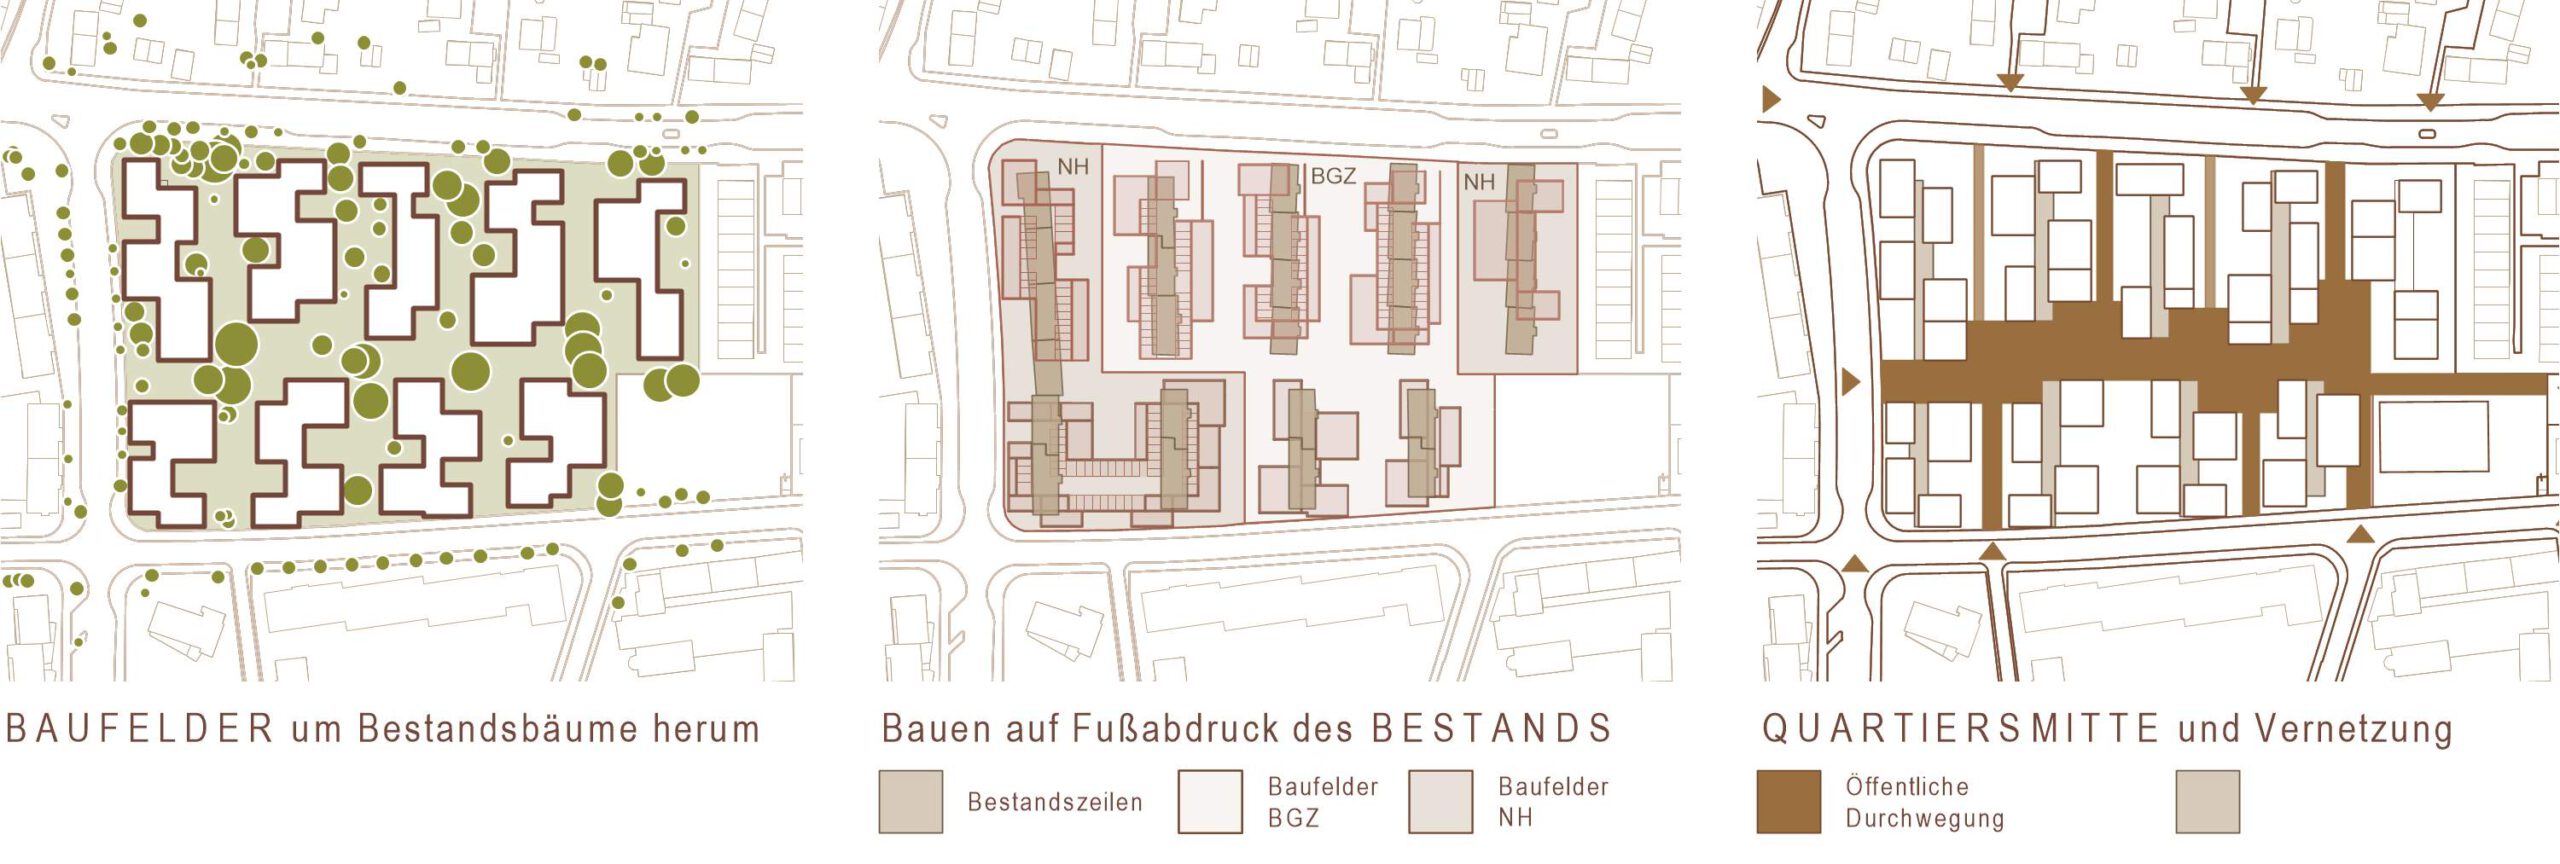 Pikto 371 Quartier am Rotweg Stuttgart Rot FFM-ARCHITEKTEN